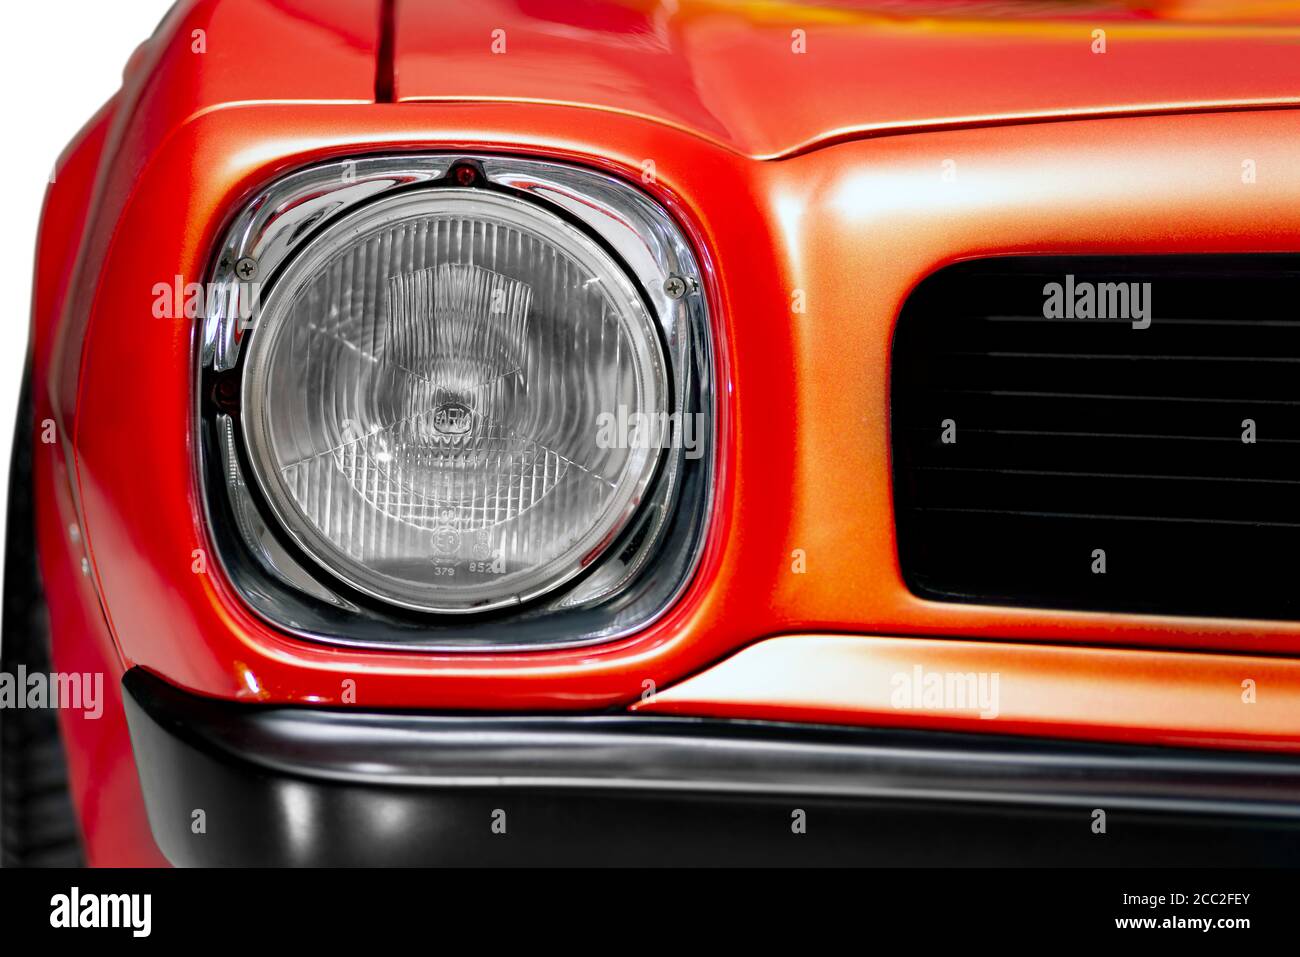 Izmir, Turkey - July 11, 2020: Close up shot of a Orange colored 1974 Pontiac Firebird's headlight. Stock Photo